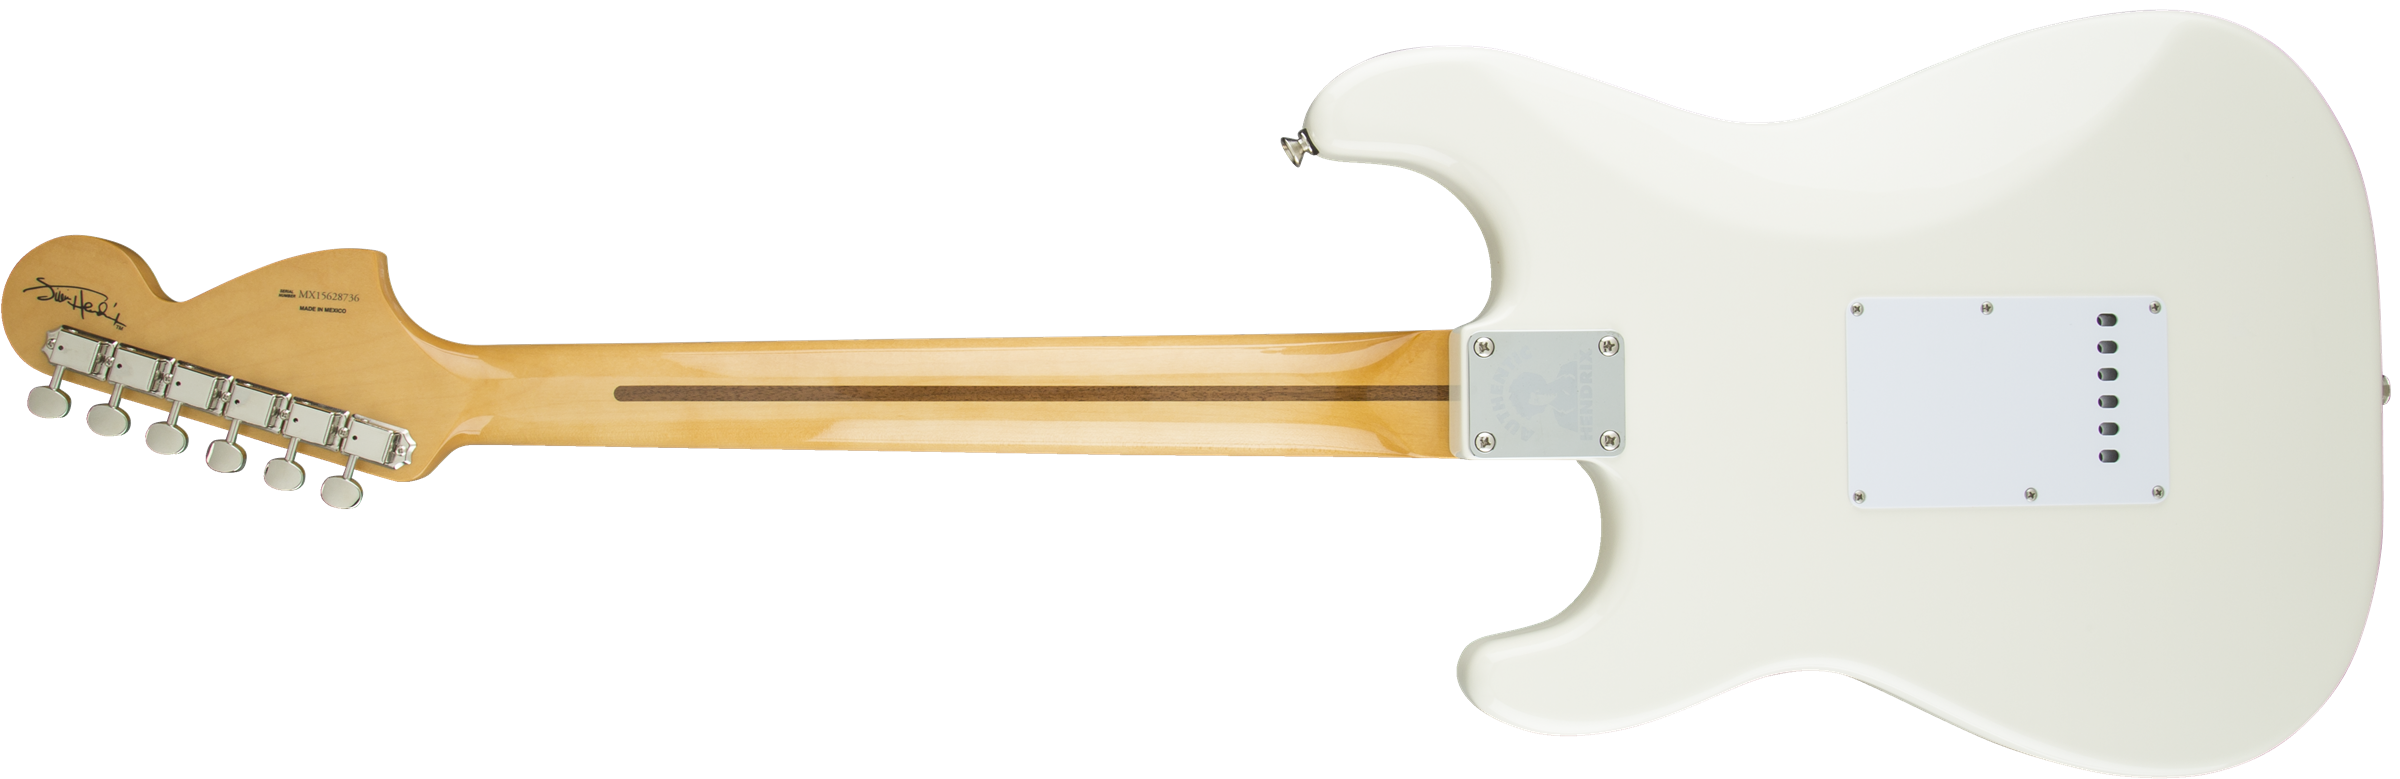 Fender Jimi Hendrix Stratocaster (mex, Mn) - Olympic White - Elektrische gitaar in Str-vorm - Variation 1